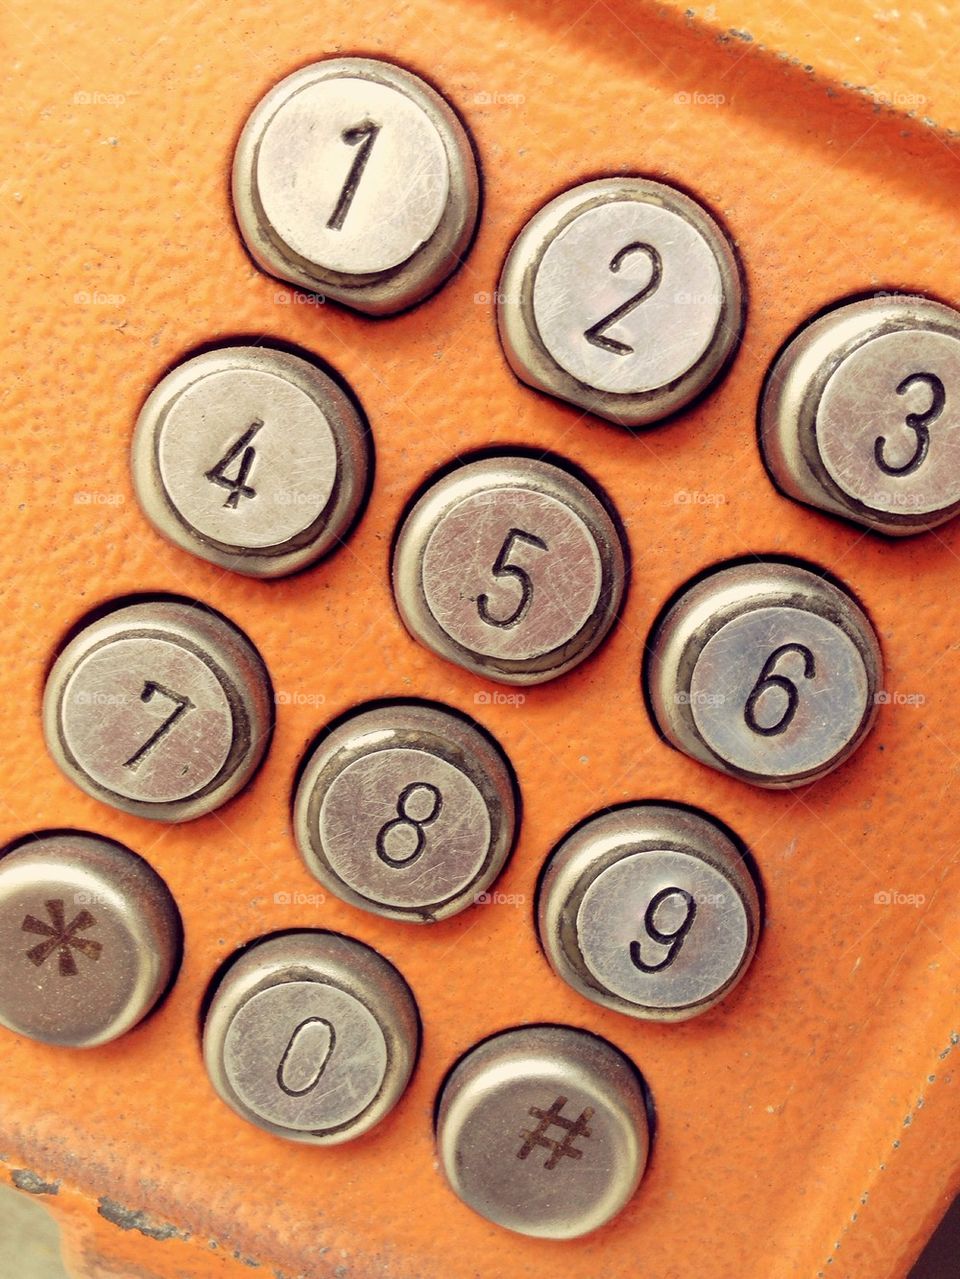 Telephone numeric pad